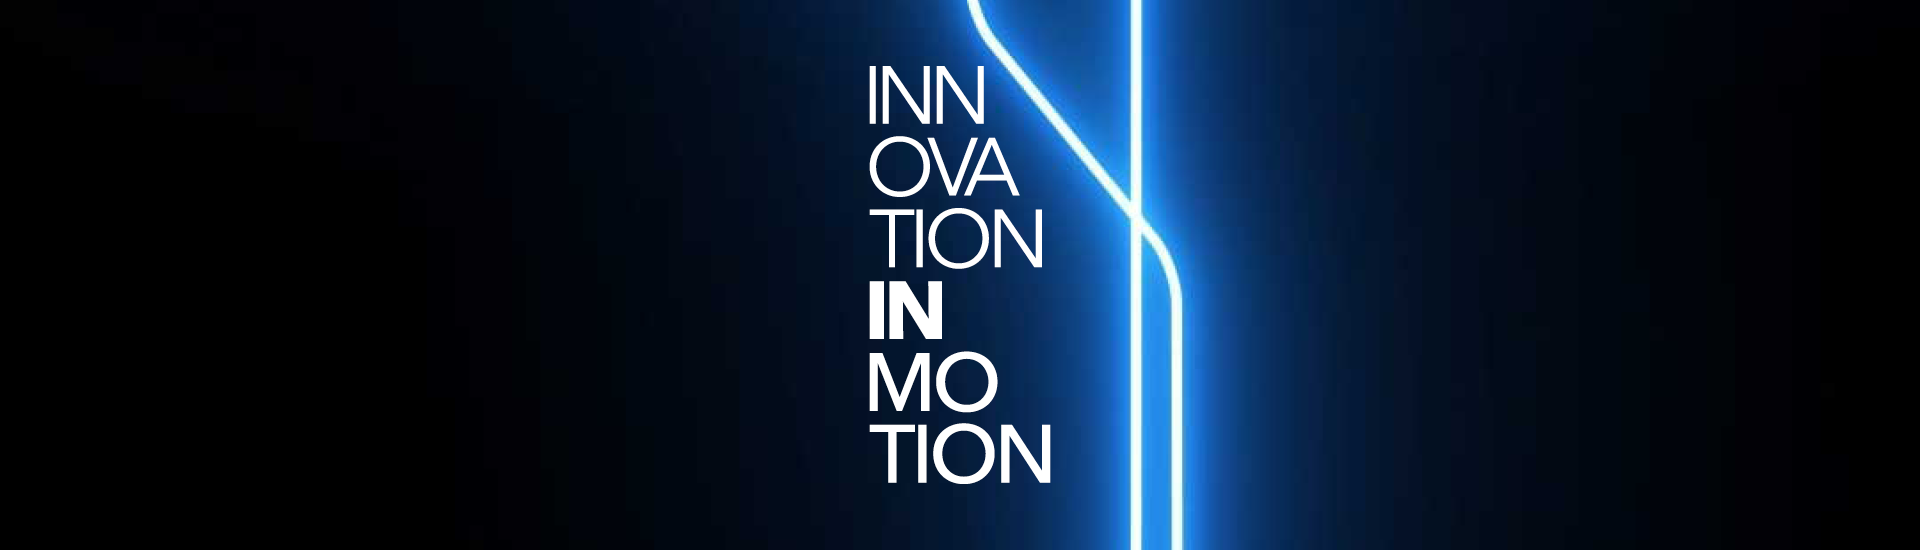 Banner da exposição Innovation in Motion